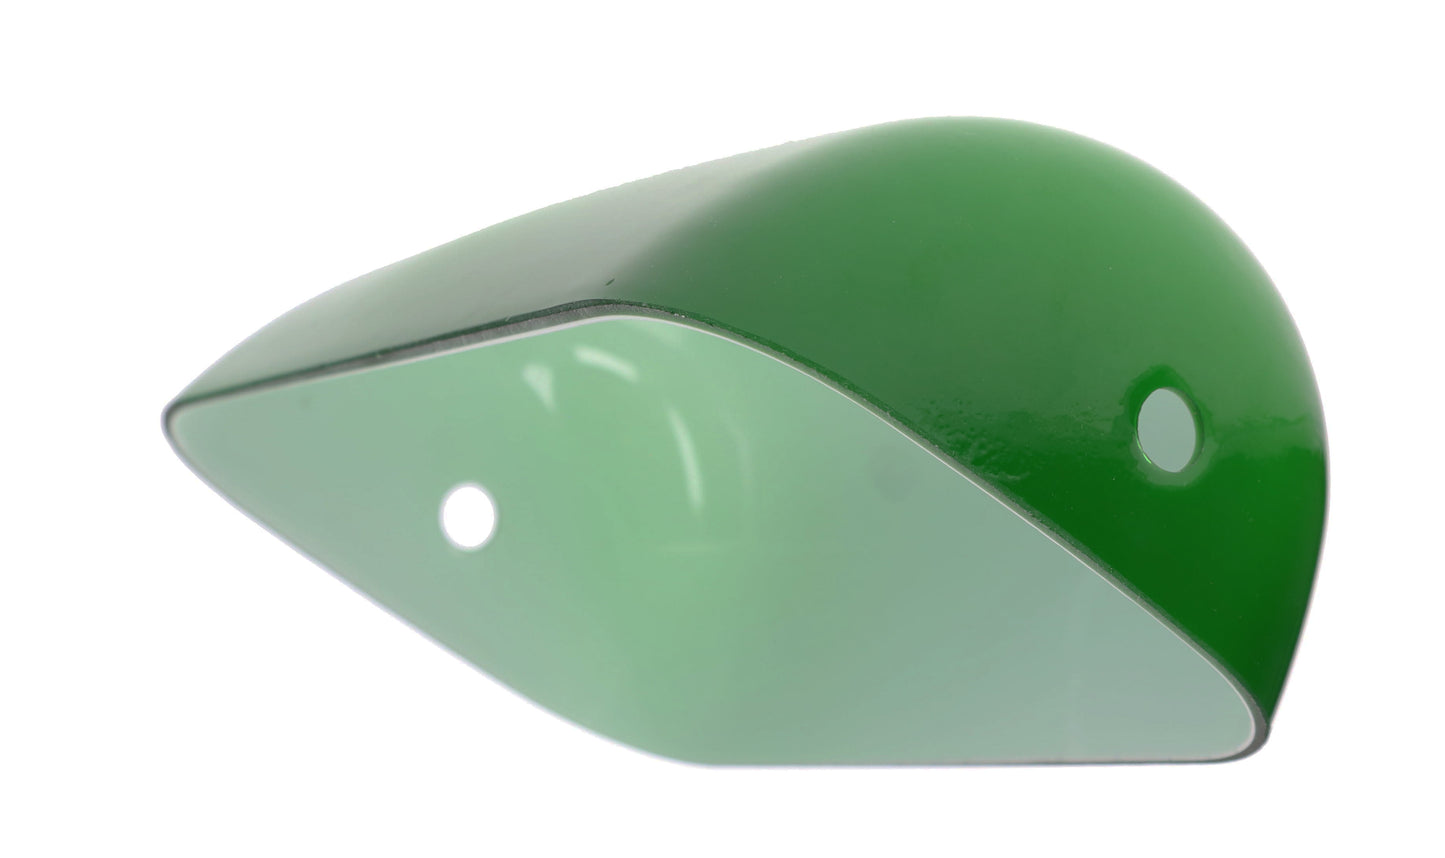 Cased Green Pharmacy Lamp Shade (08691)